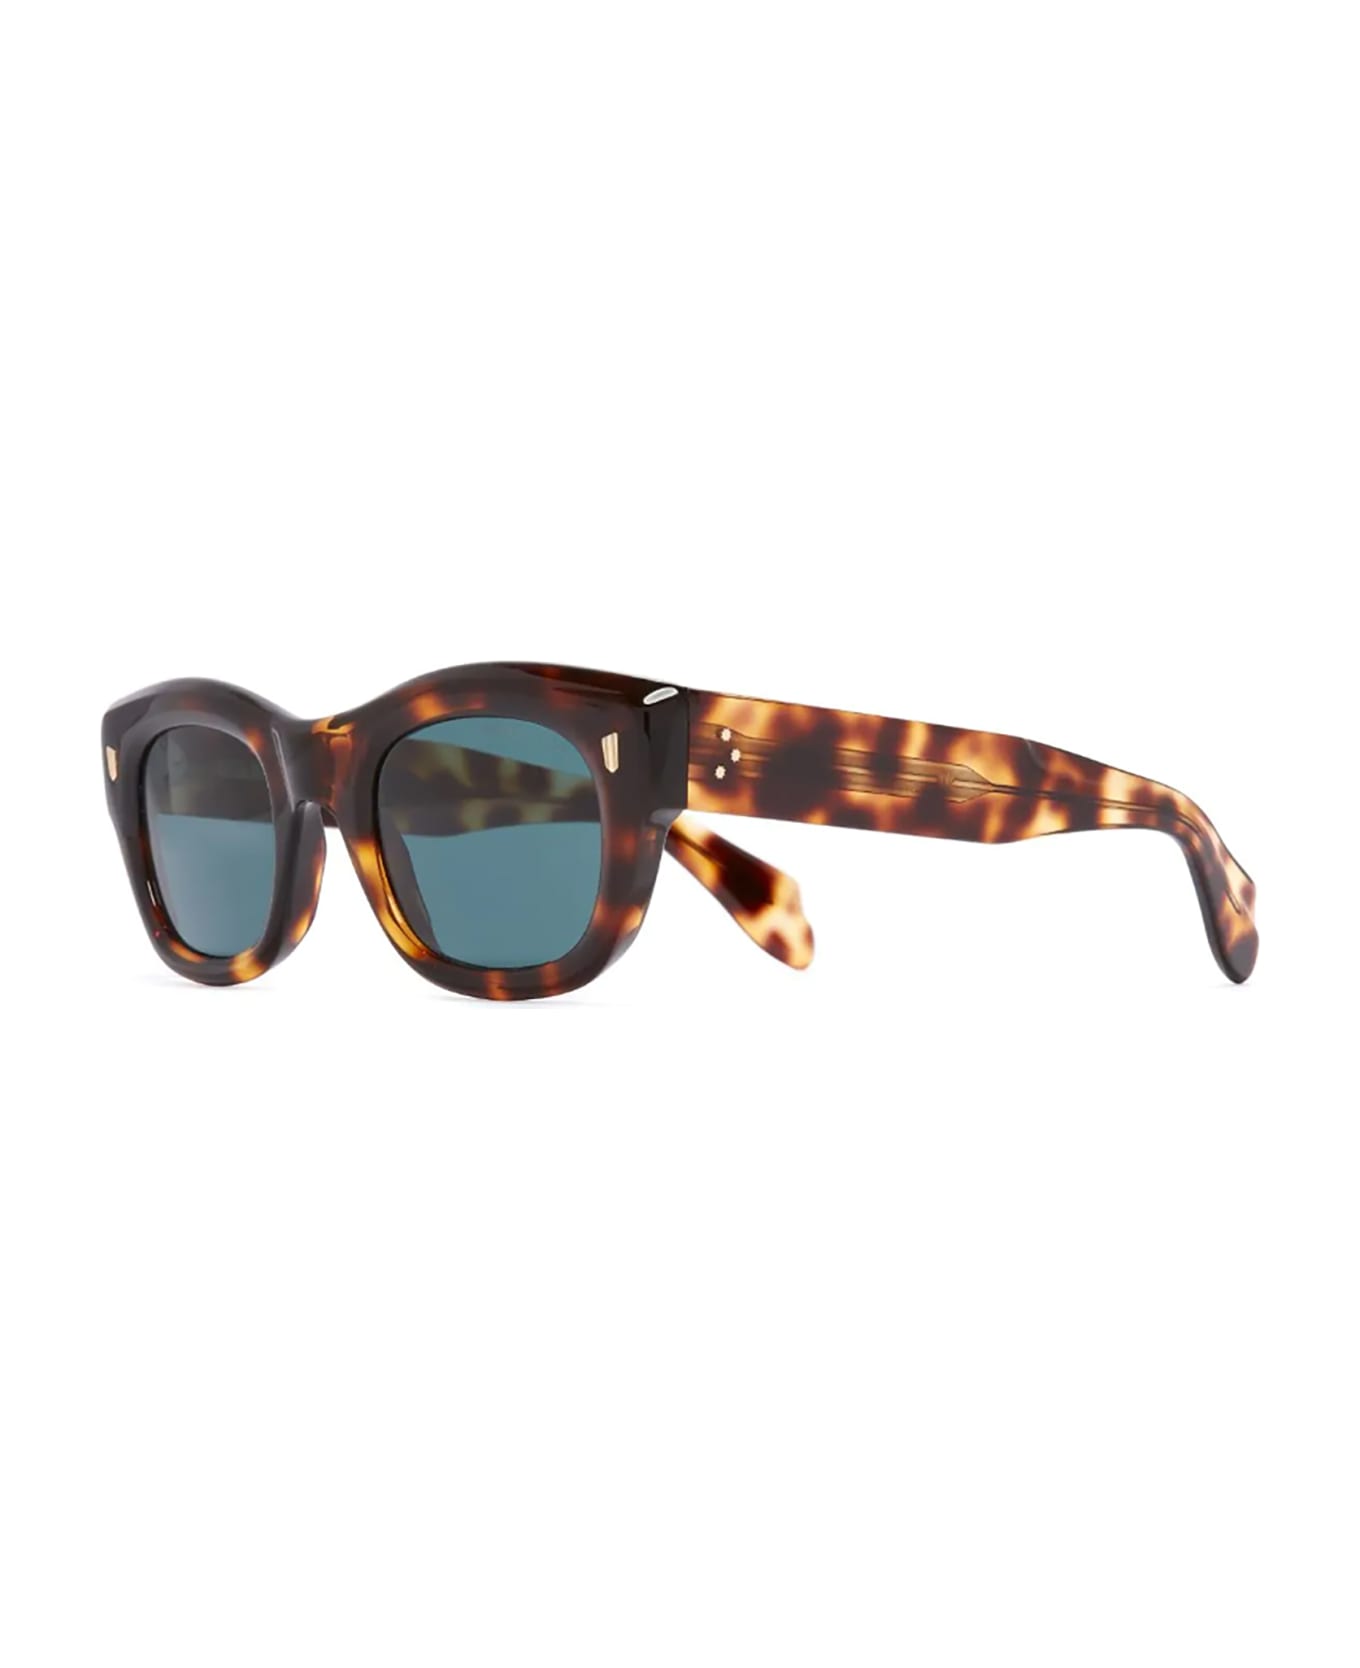 Cutler and Gross 9261 Sunglasses - Old Brown Havana サングラス